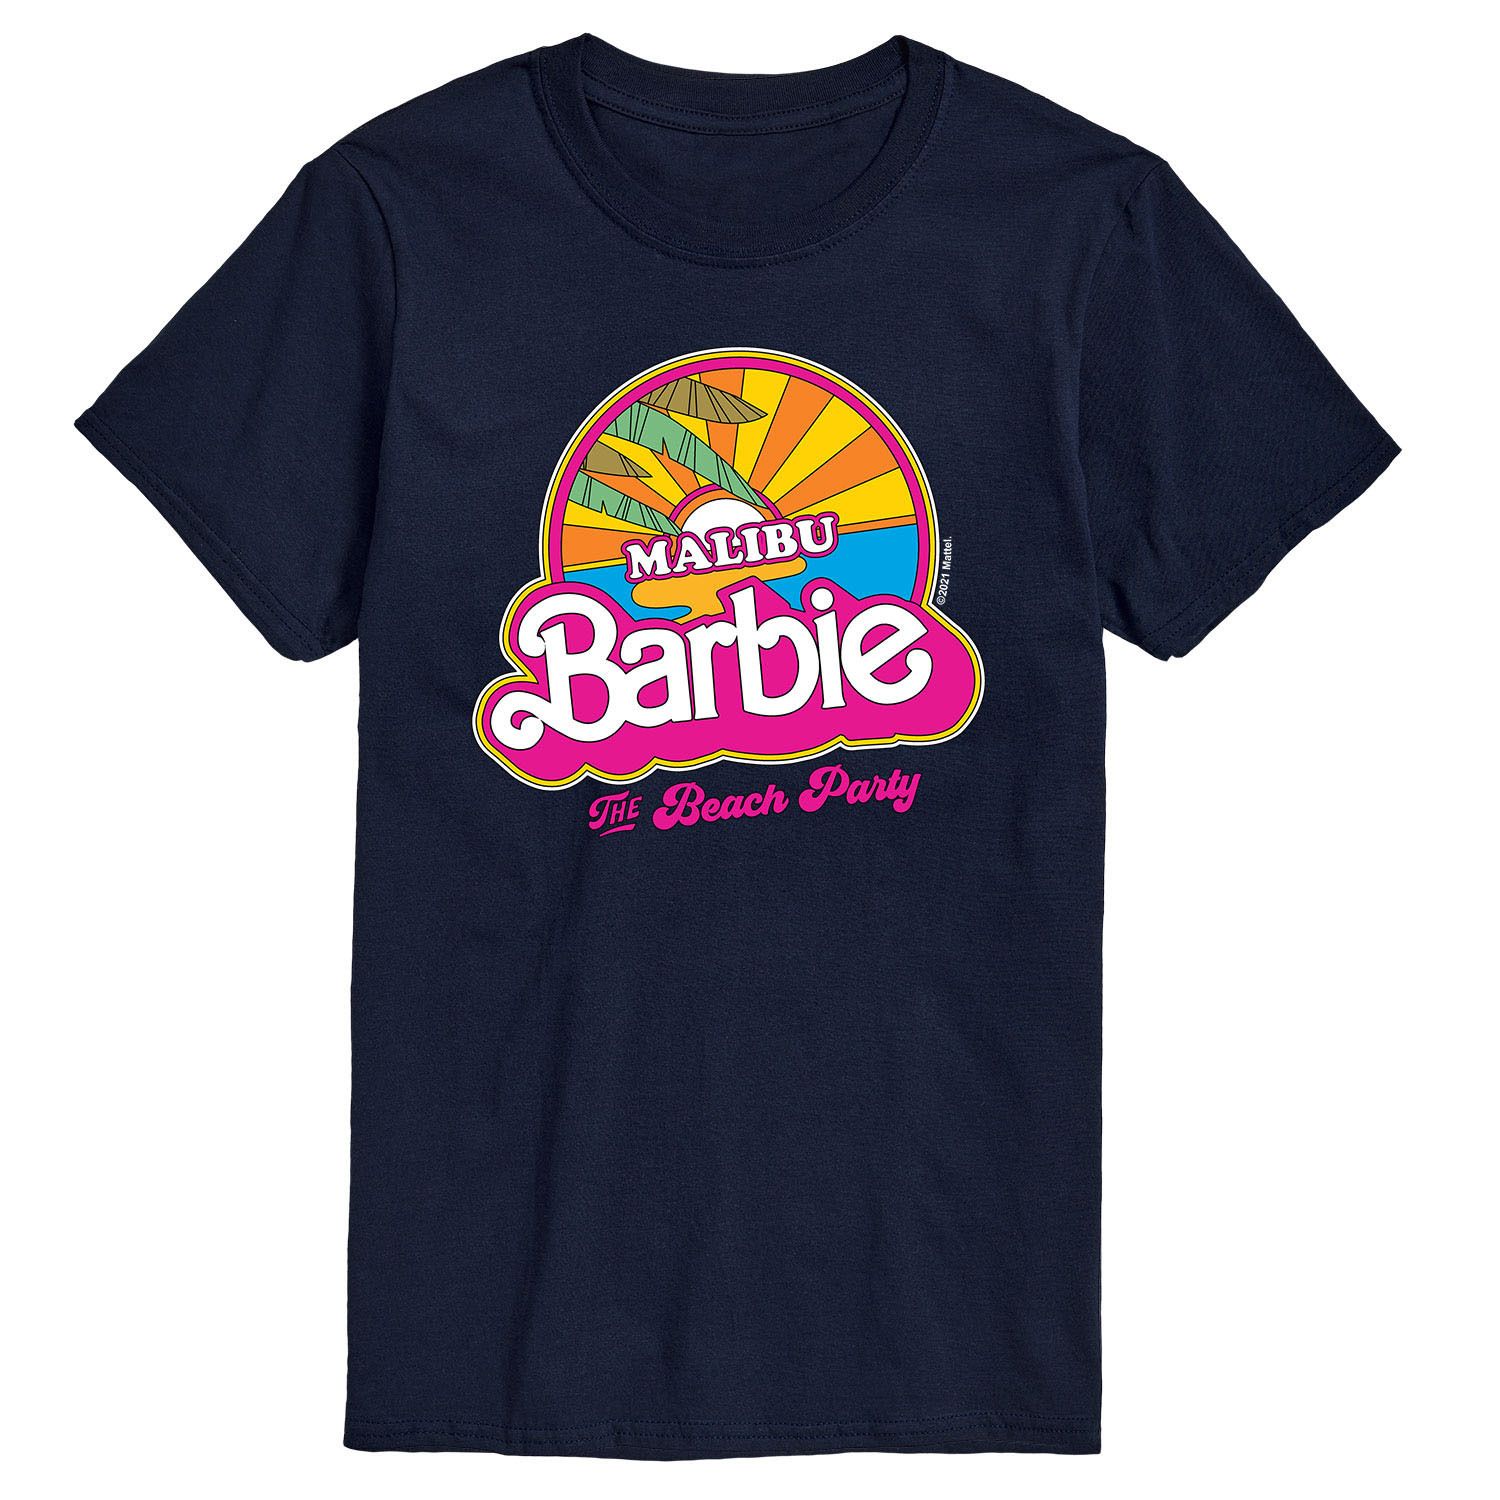 Мужская футболка Барби Малибу Licensed Character футболка с рисунком барби малибу для юниоров licensed character